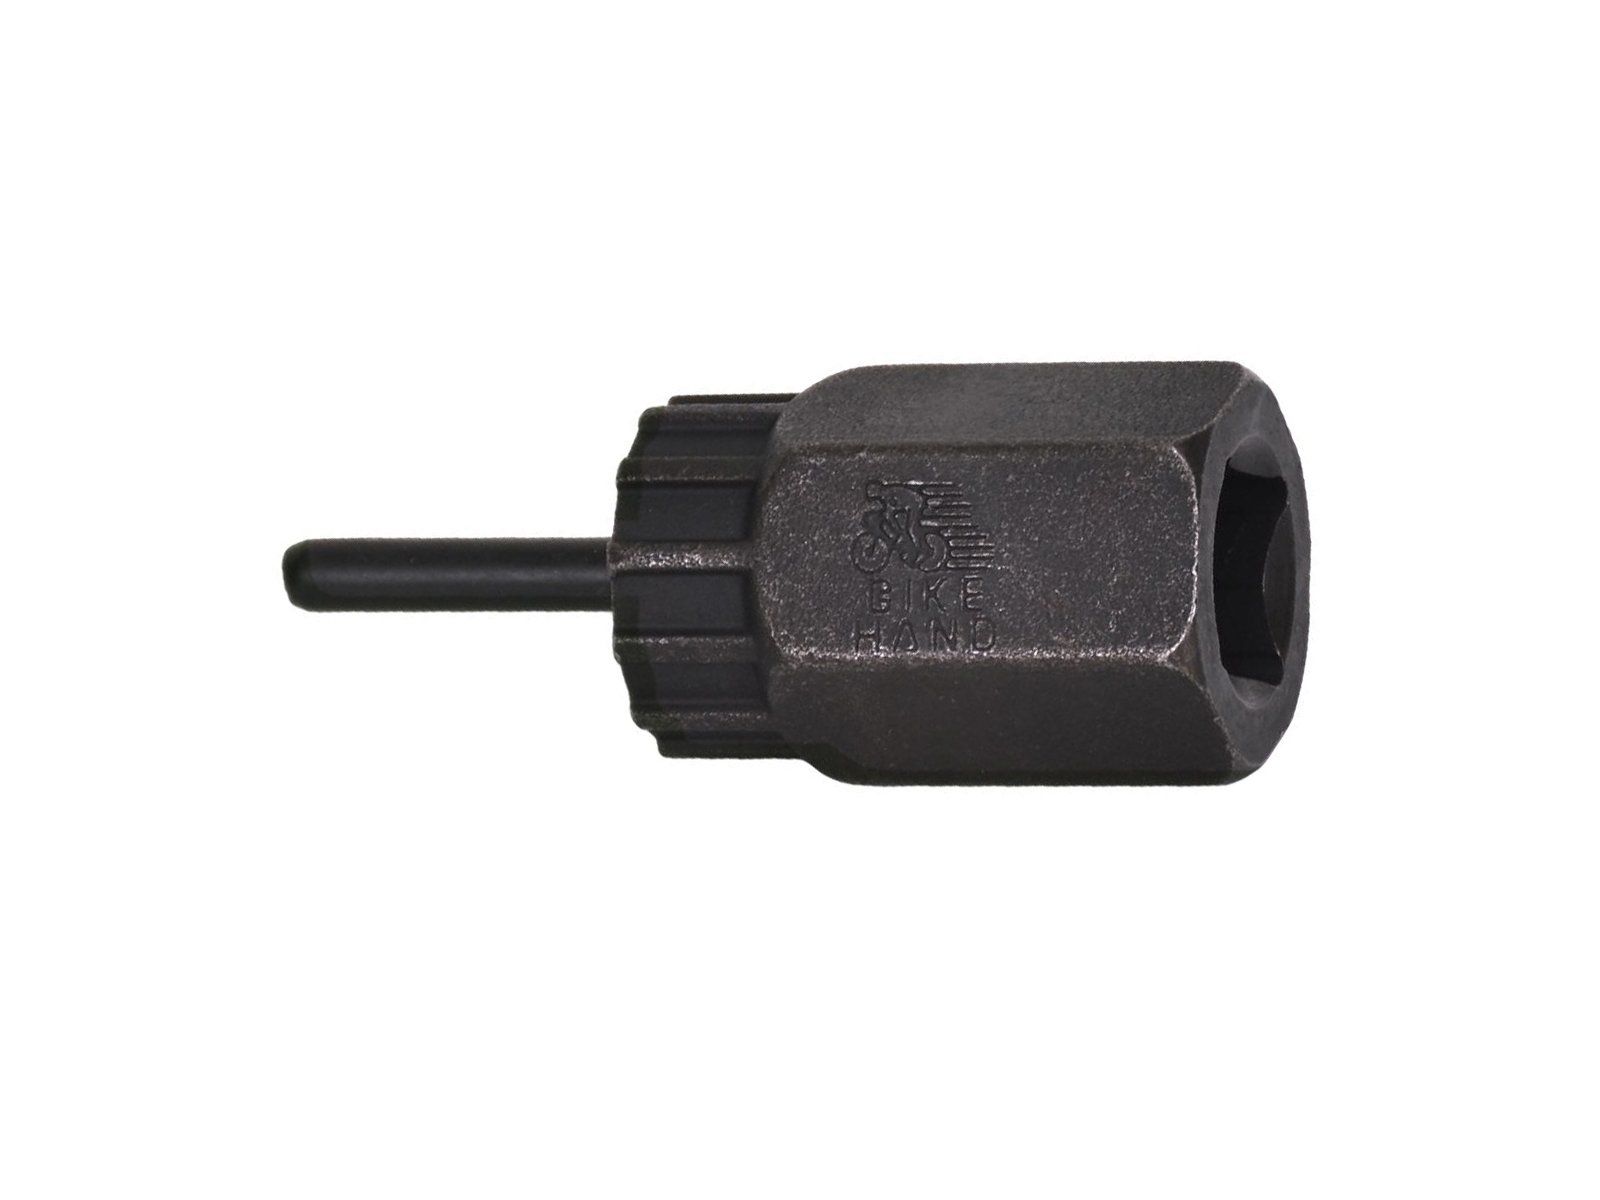 Съемник кассеты велосипеда. Съемник кассеты 6-648431. Съемник трещётки STG YC-121a. Съемник кассеты Birzman 12mm Lock Ring Remover (bm16-Lock-Ring-rm12).